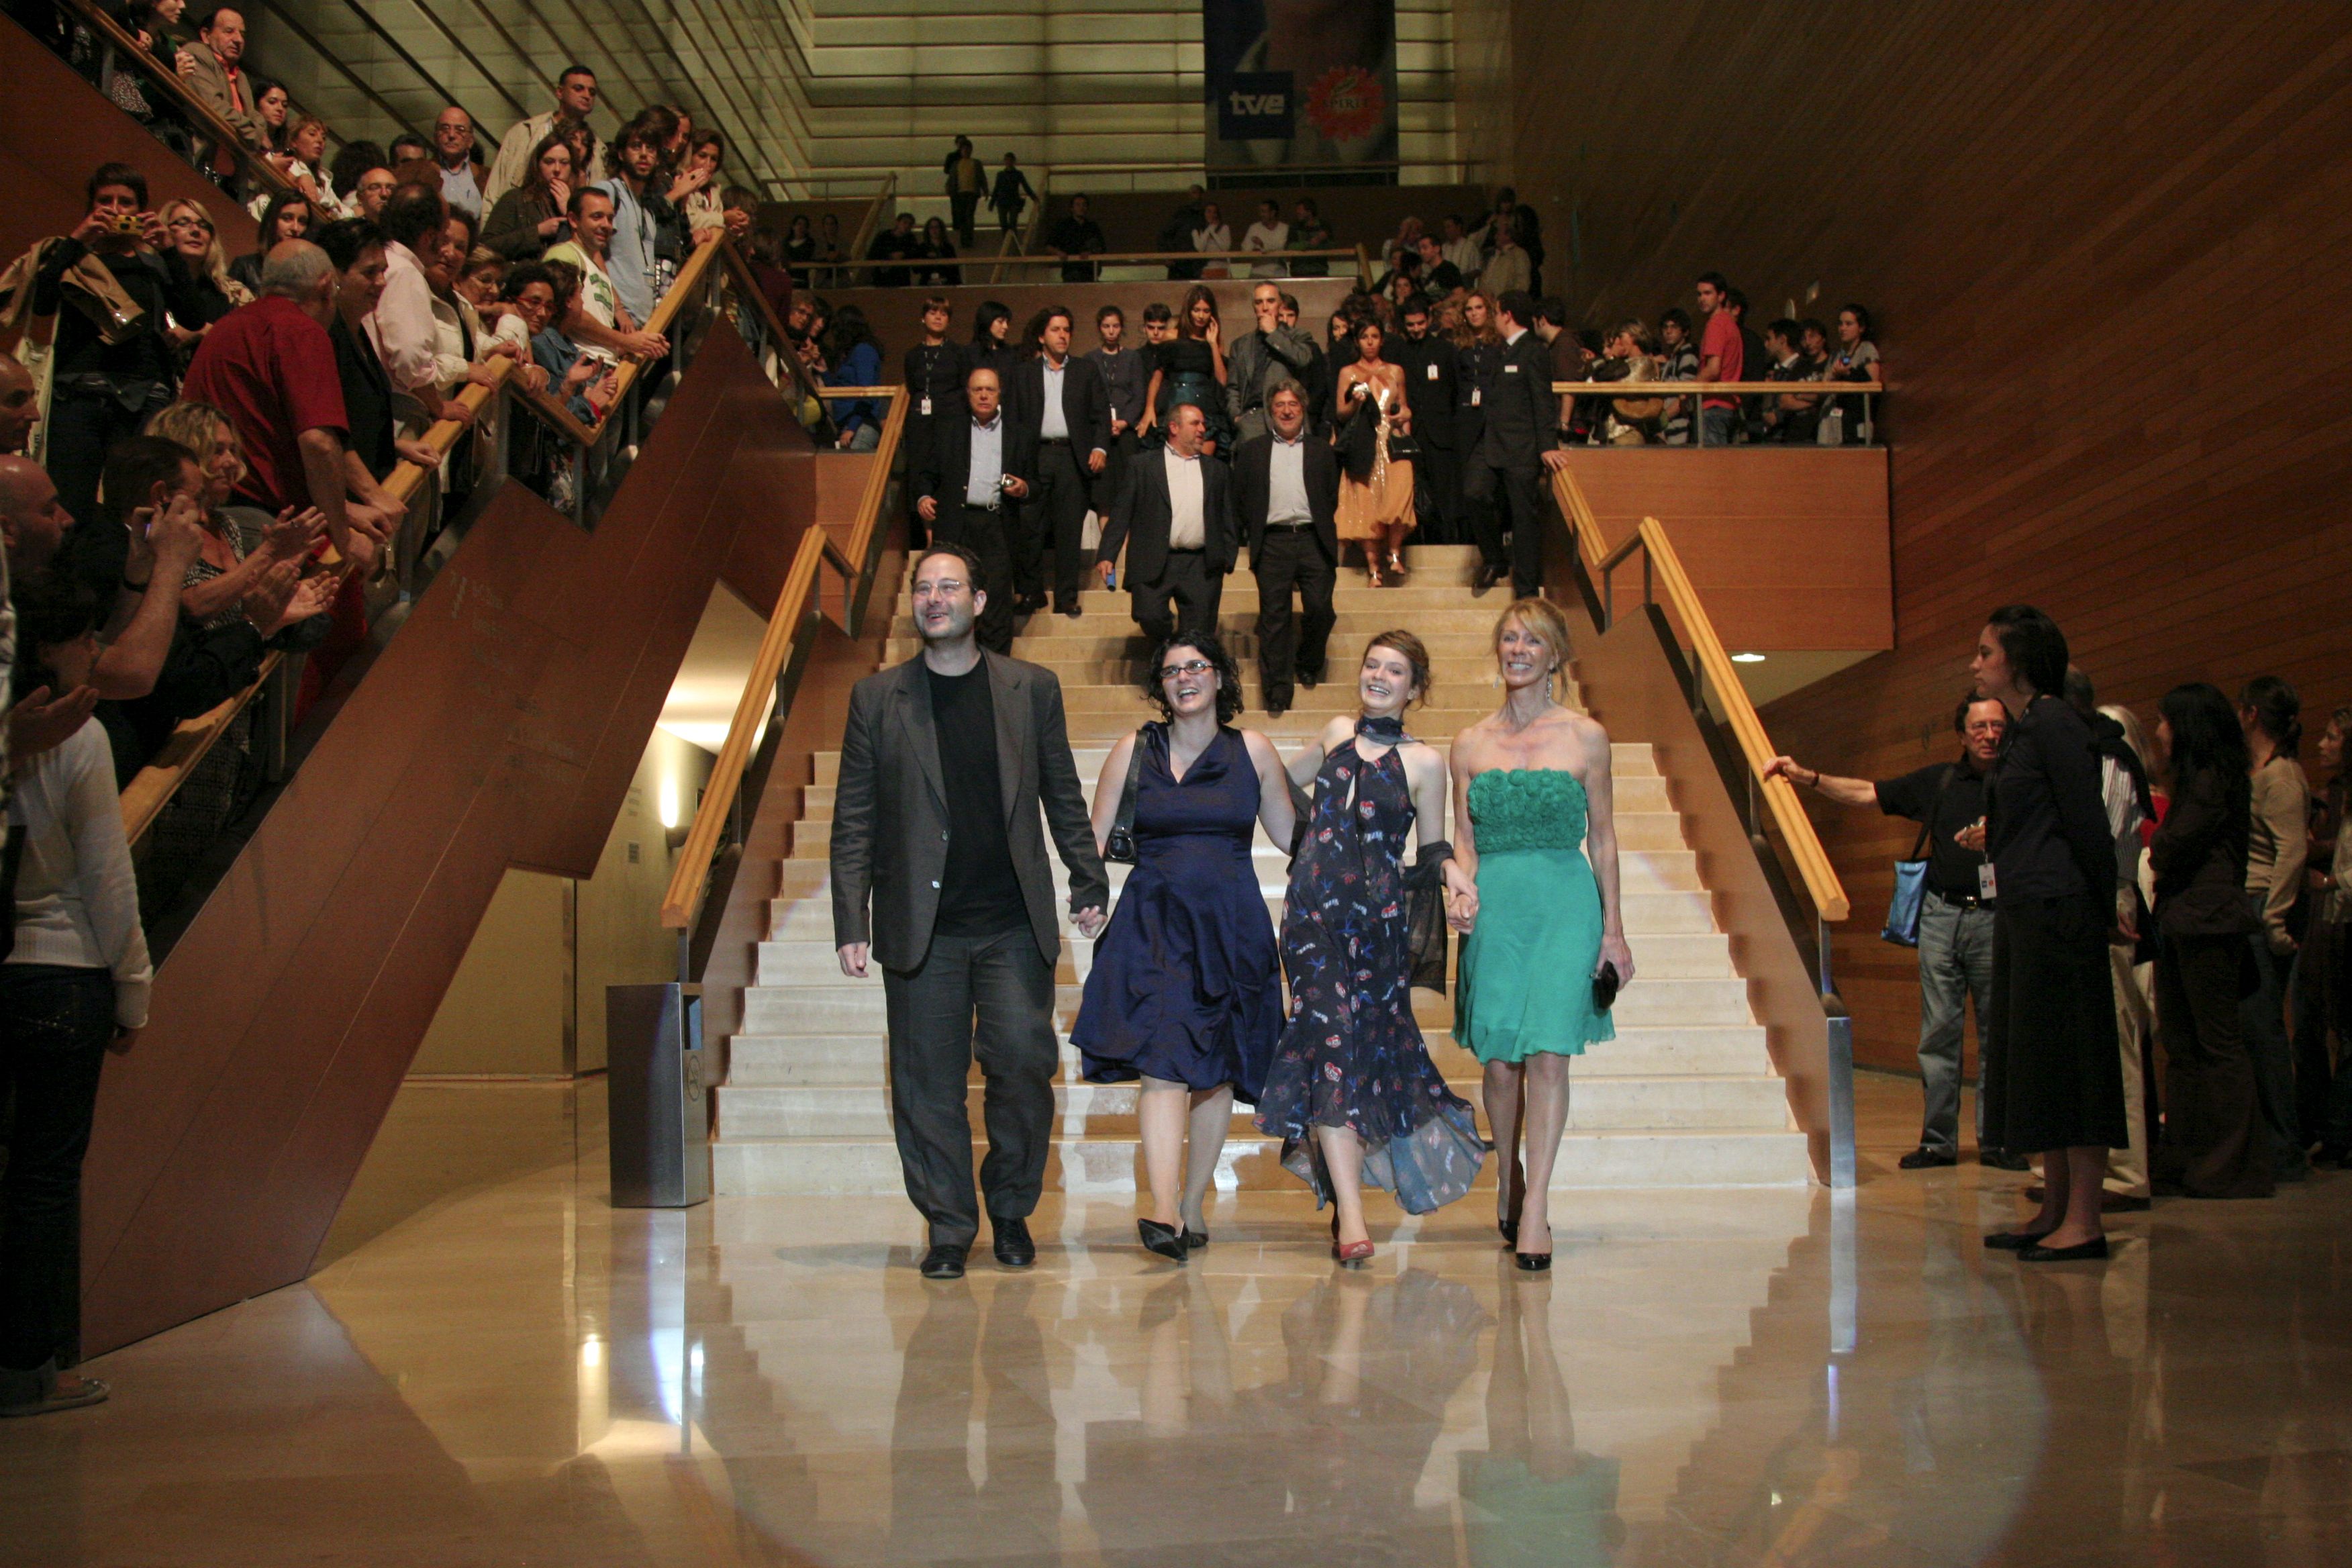 Encarnacion 2007, San Sebastian Film Festival presentation. Diego Dubcovsky, Anahi Berneri, Martina Juncadella, Anahi Berneri.